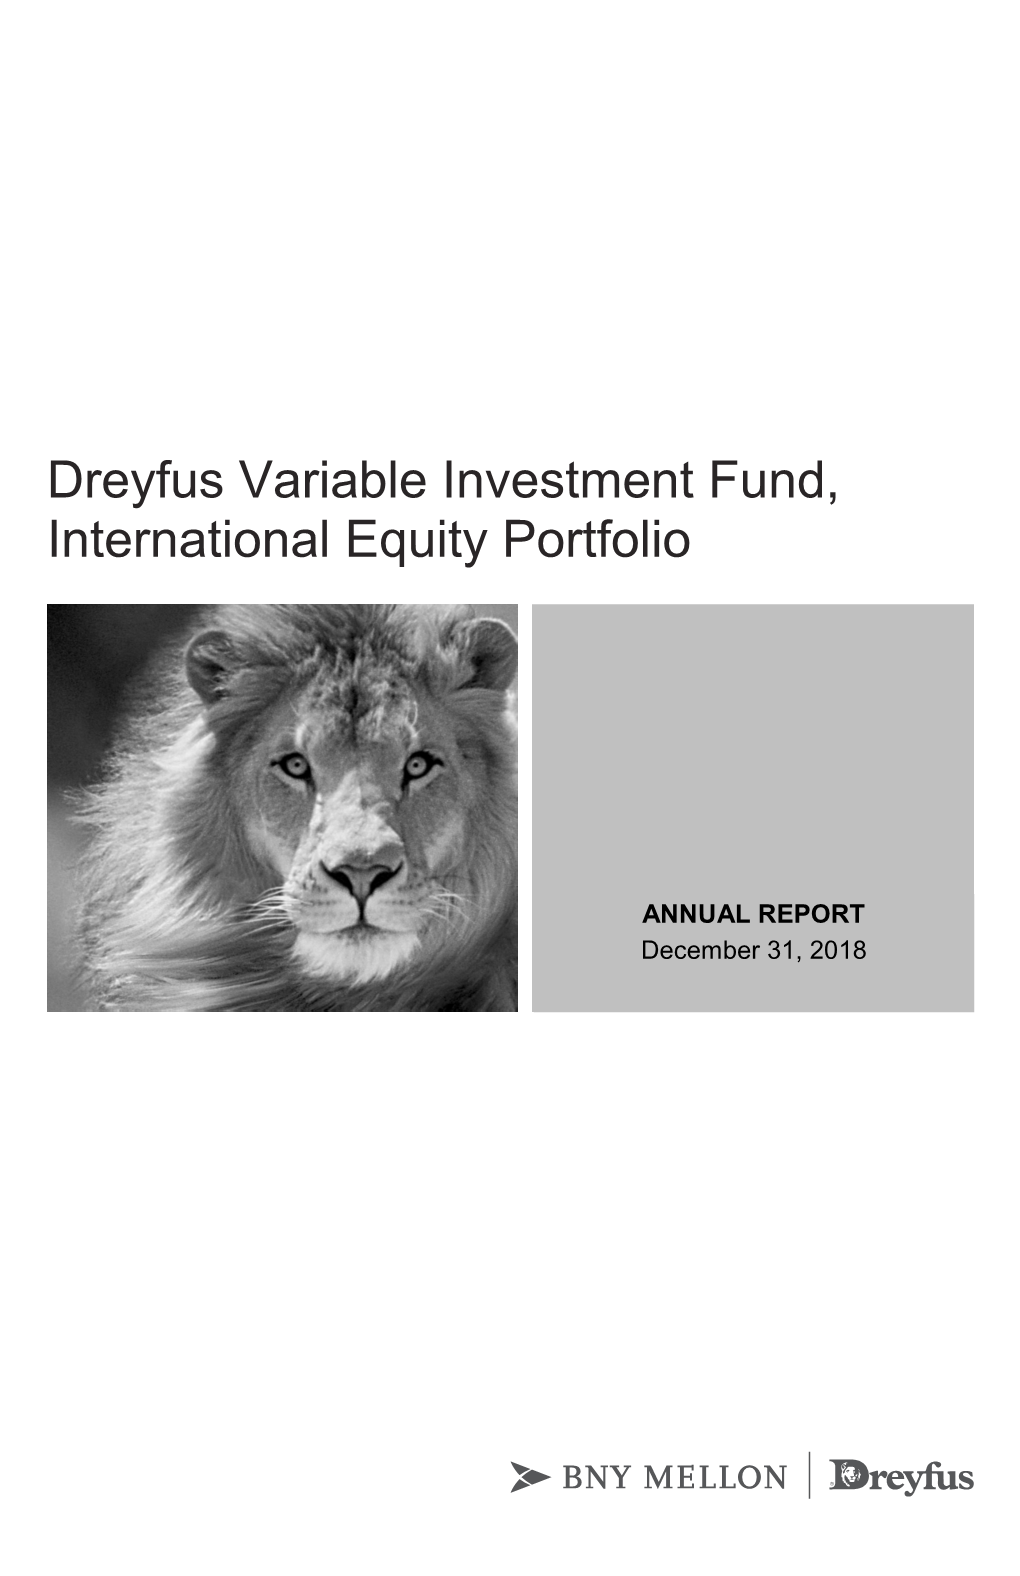 Dreyfus Variable Investment Fund, International Equity Portfolio